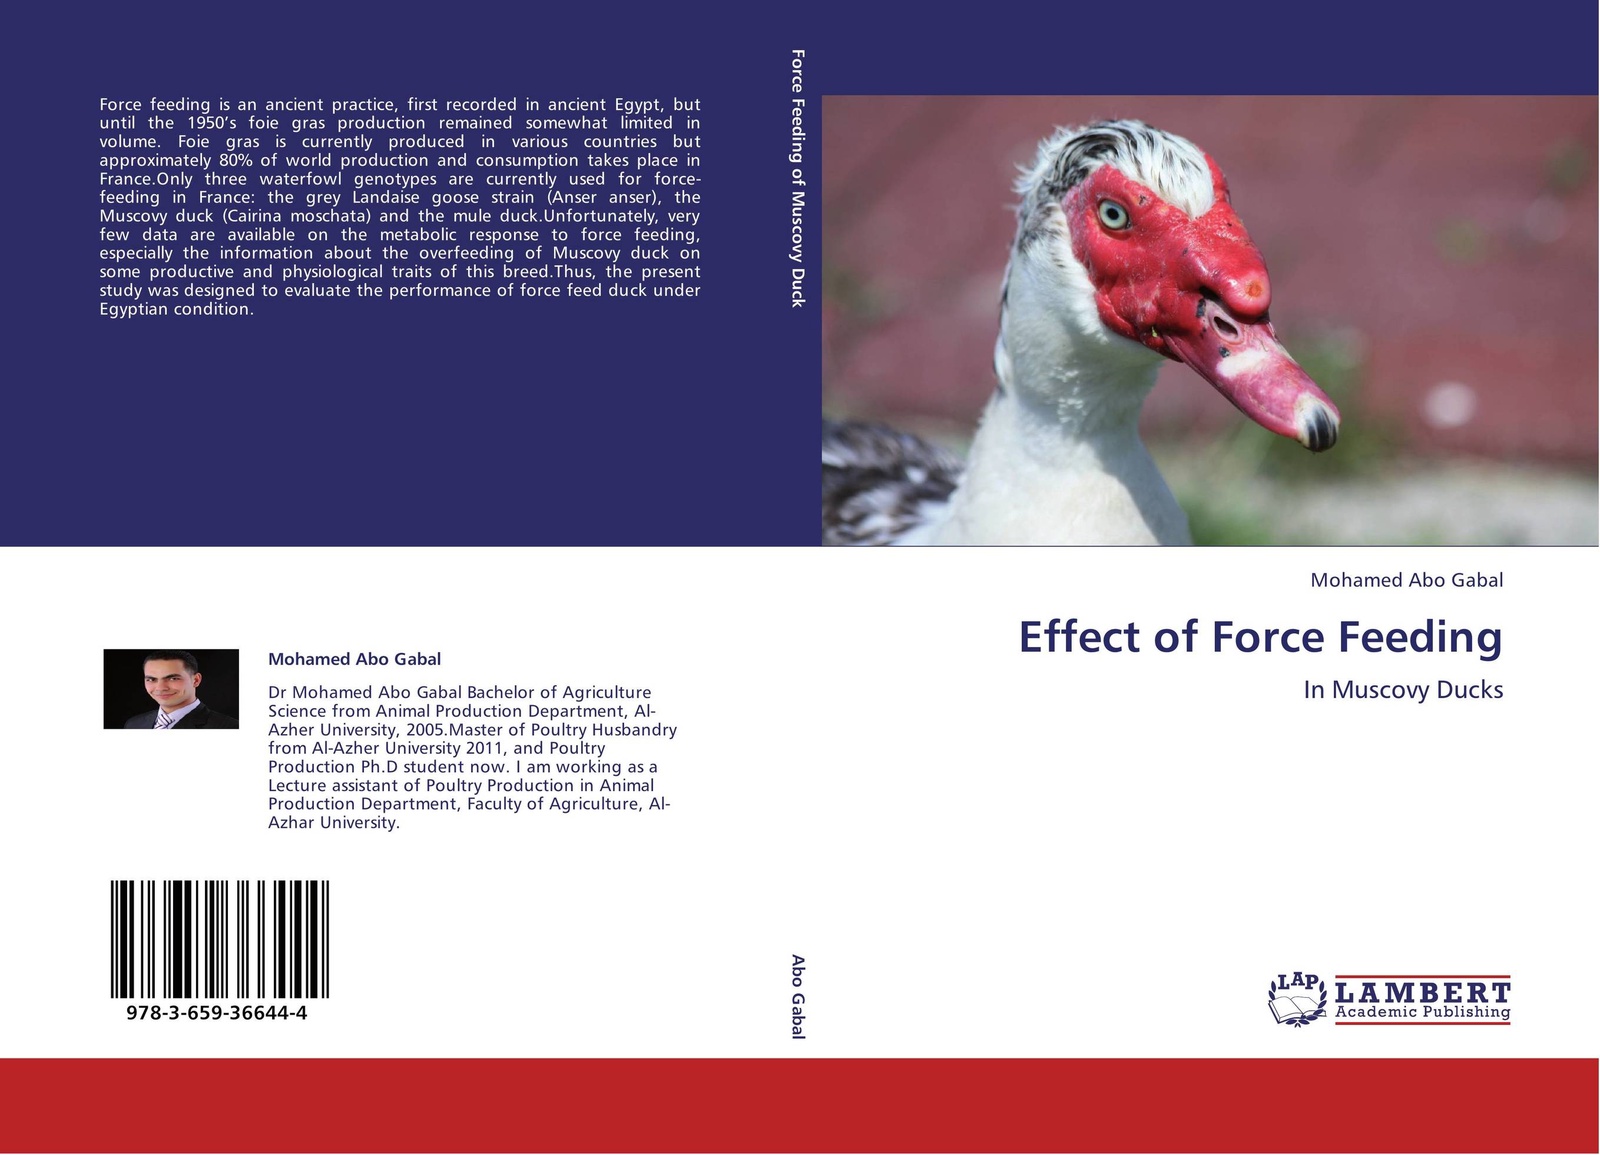 Cock feeding. Force Feed. 978-1-56320-089-2 ISBN.